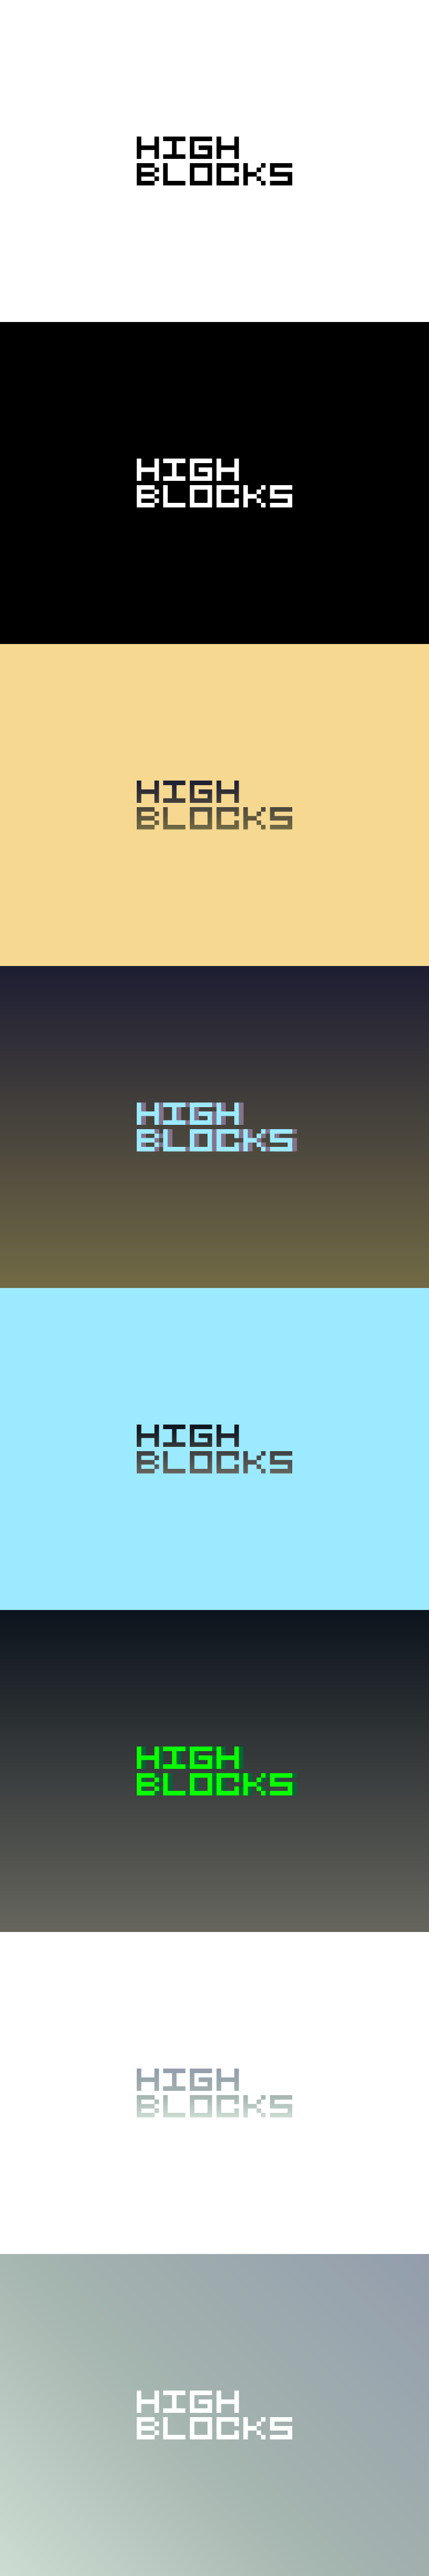 highblocks-variations-4-01.png